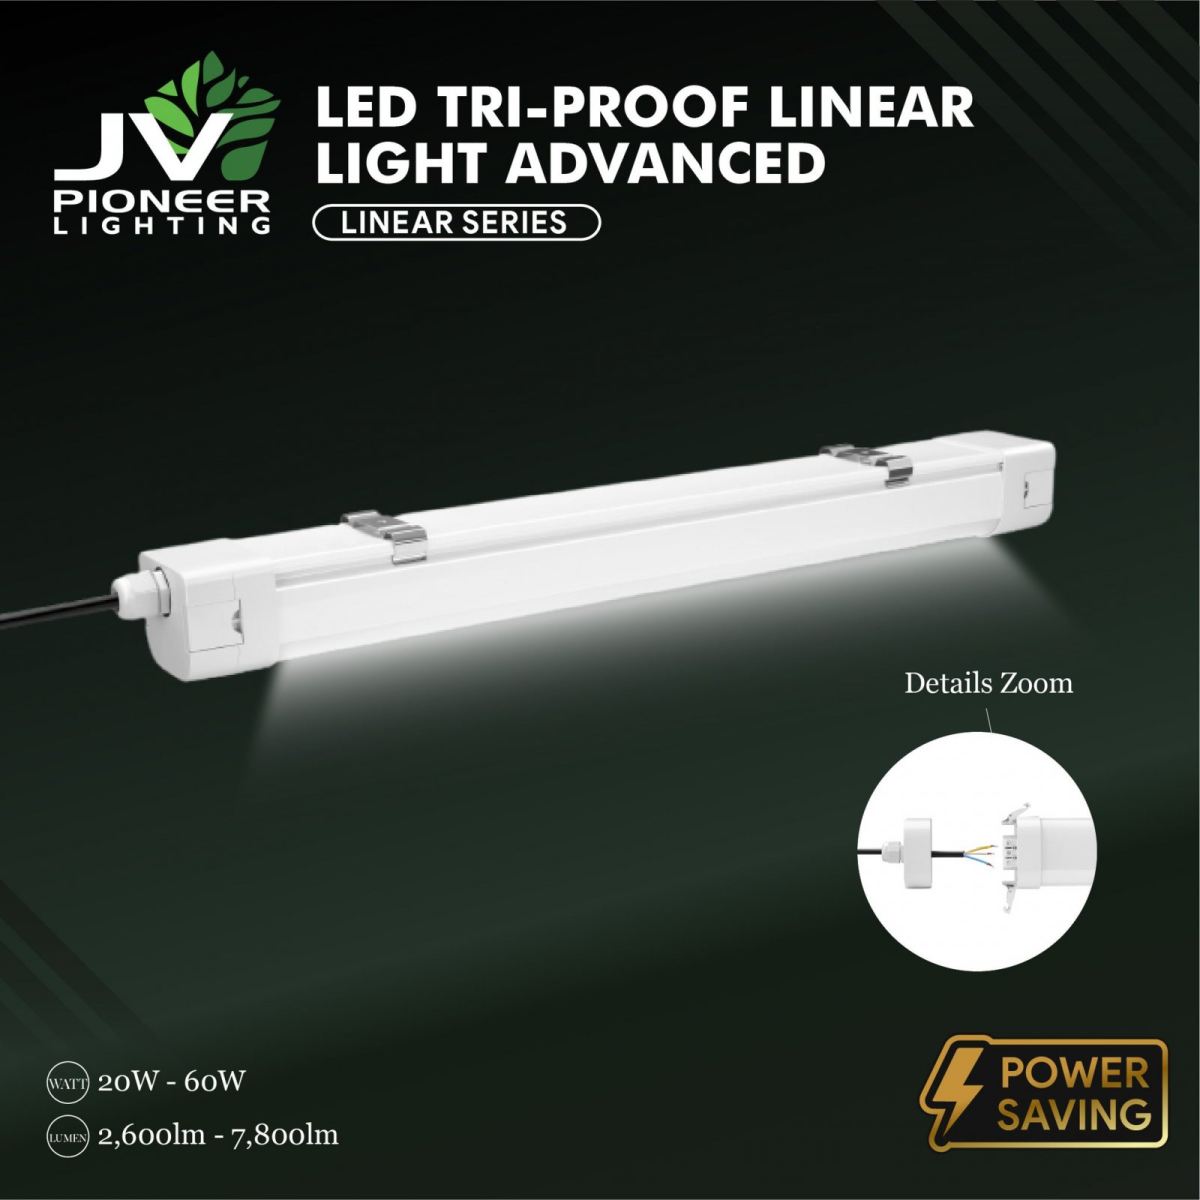 LED Tri-proof Linear Light Advanced Series